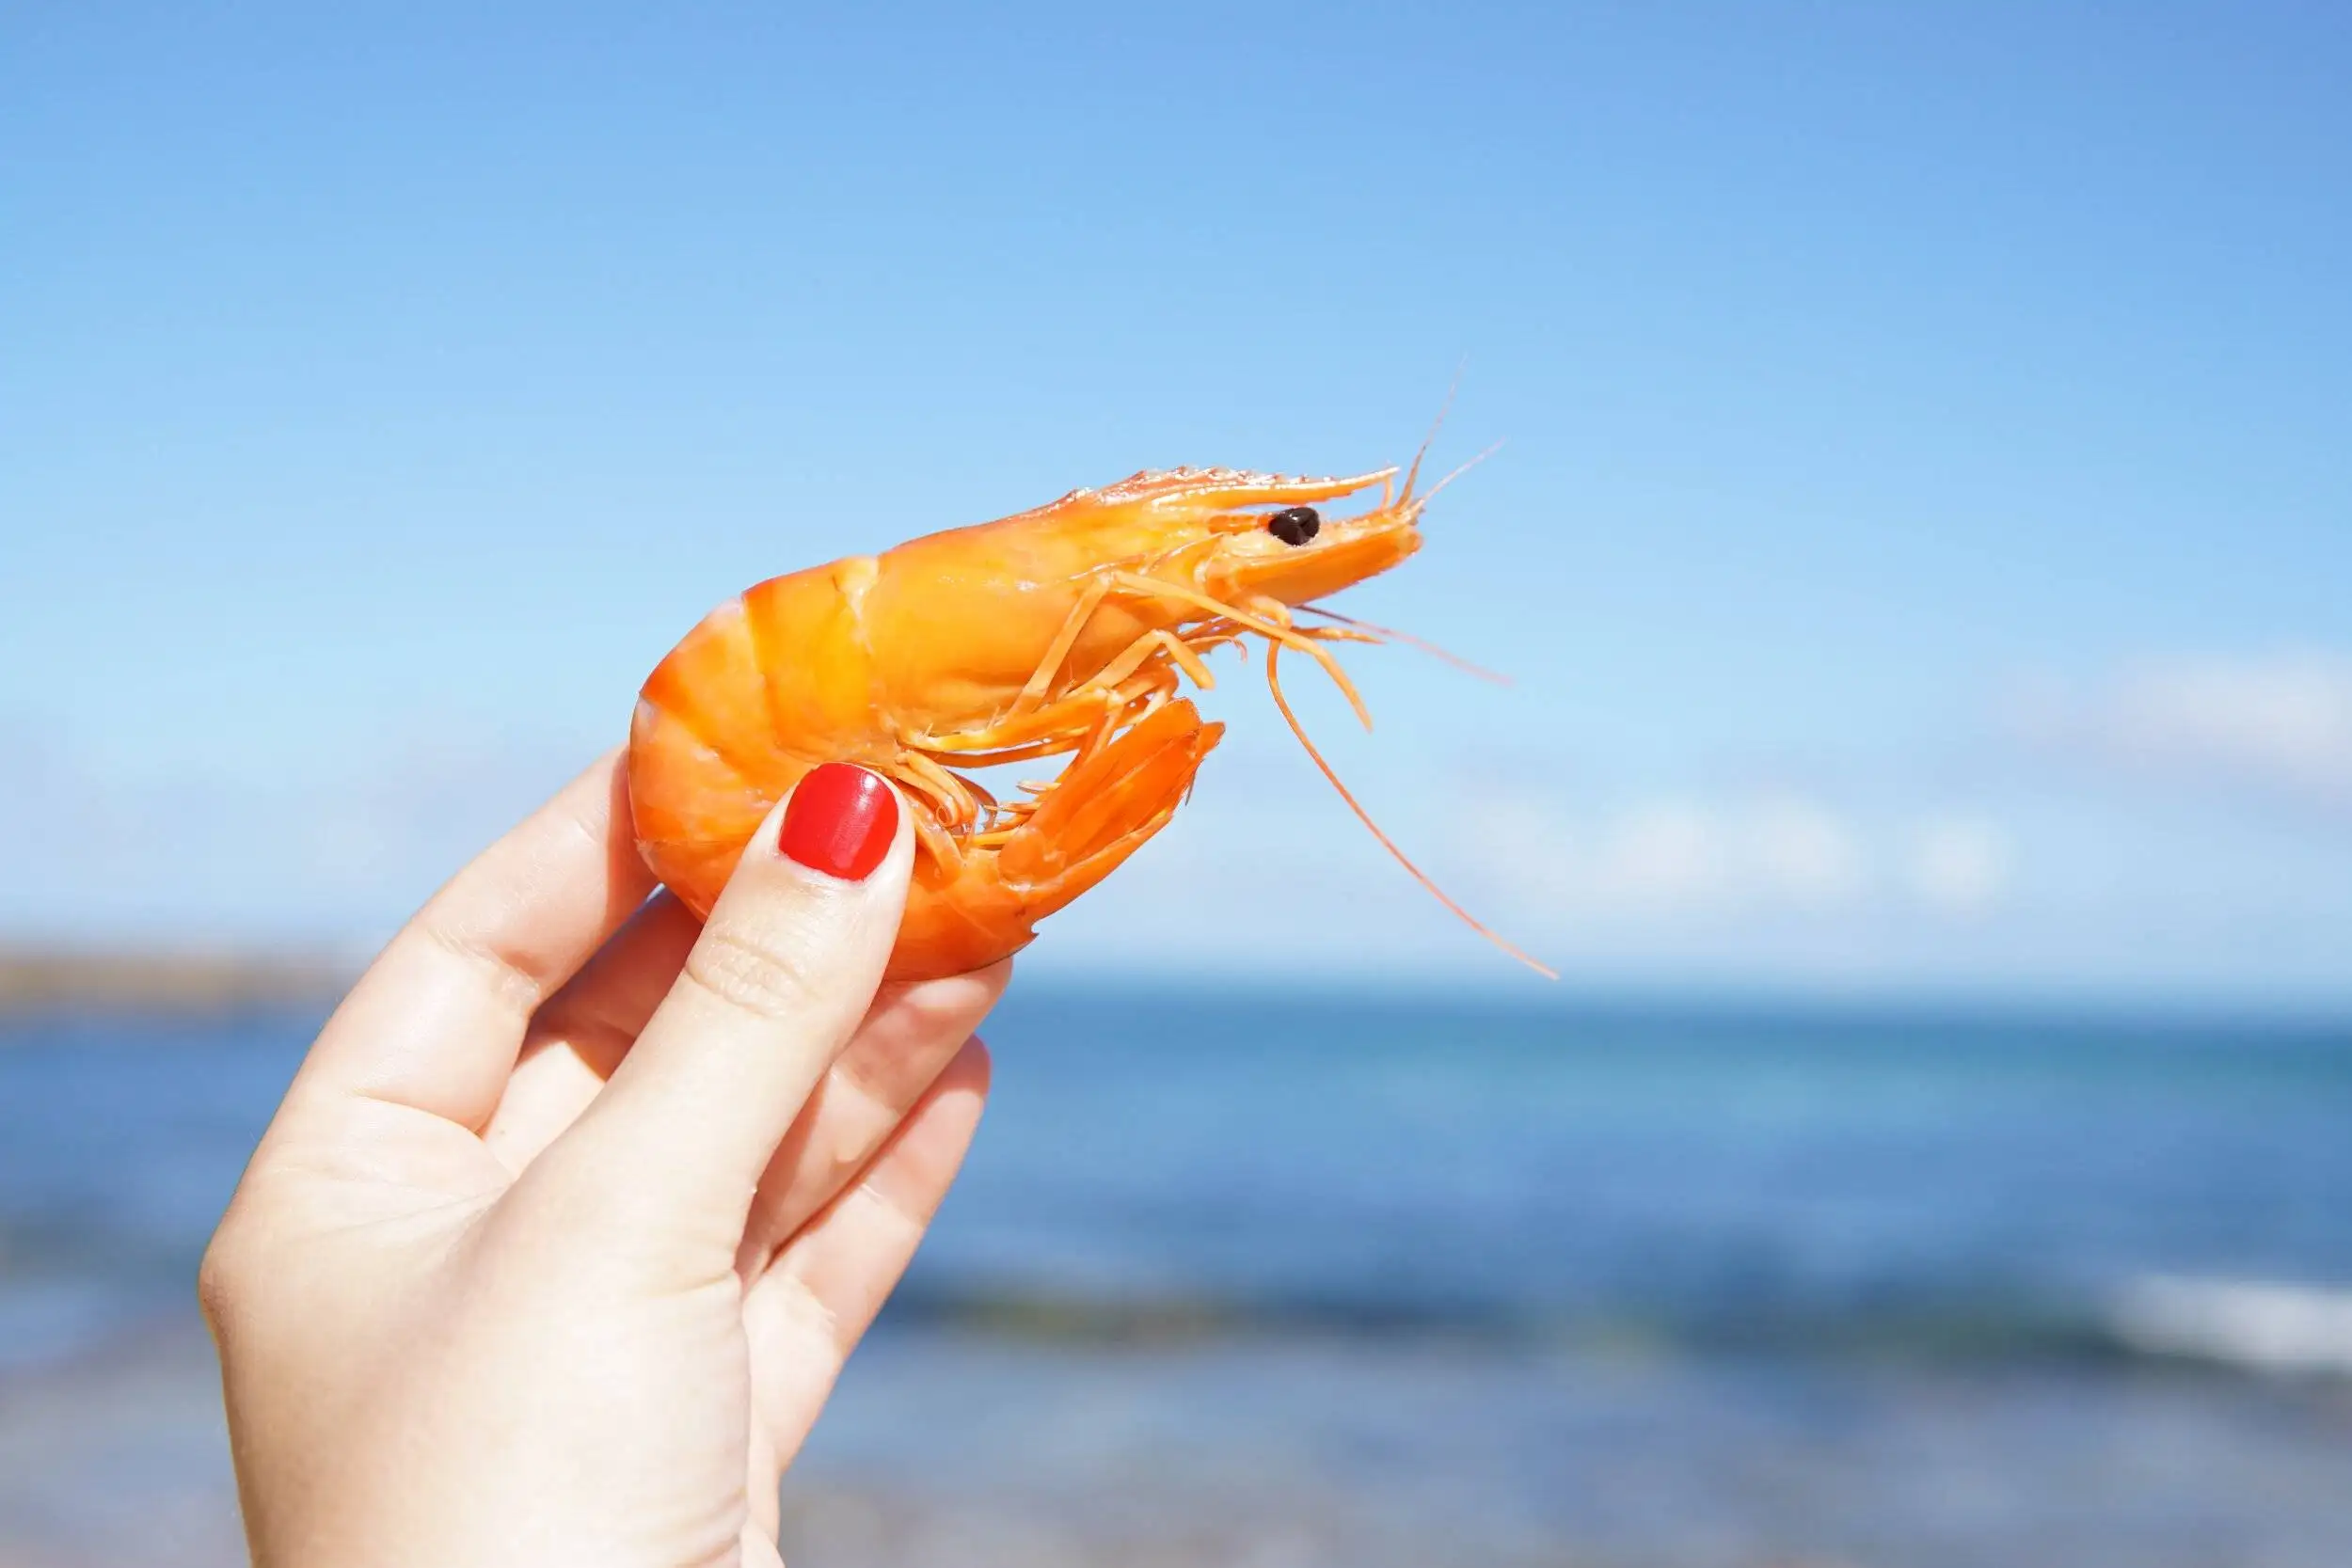 World’s Top 10 Shrimp Companies